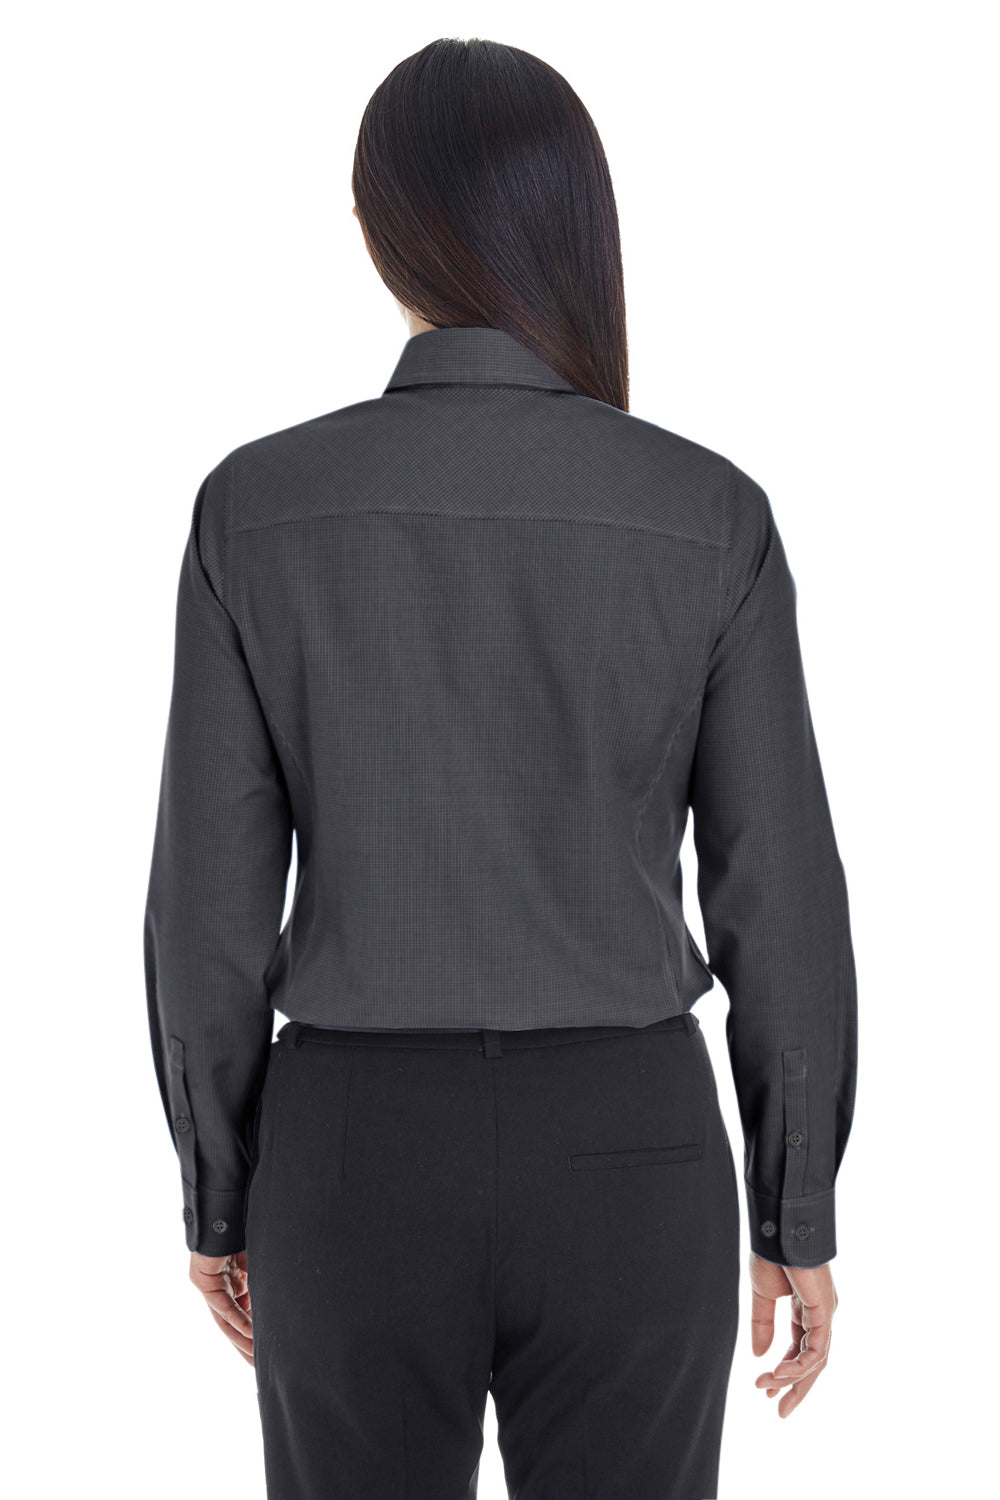 Devon & Jones DG532W Womens Crown Woven Collection Wrinkle Resistant Long Sleeve Button Down Shirt Black Back